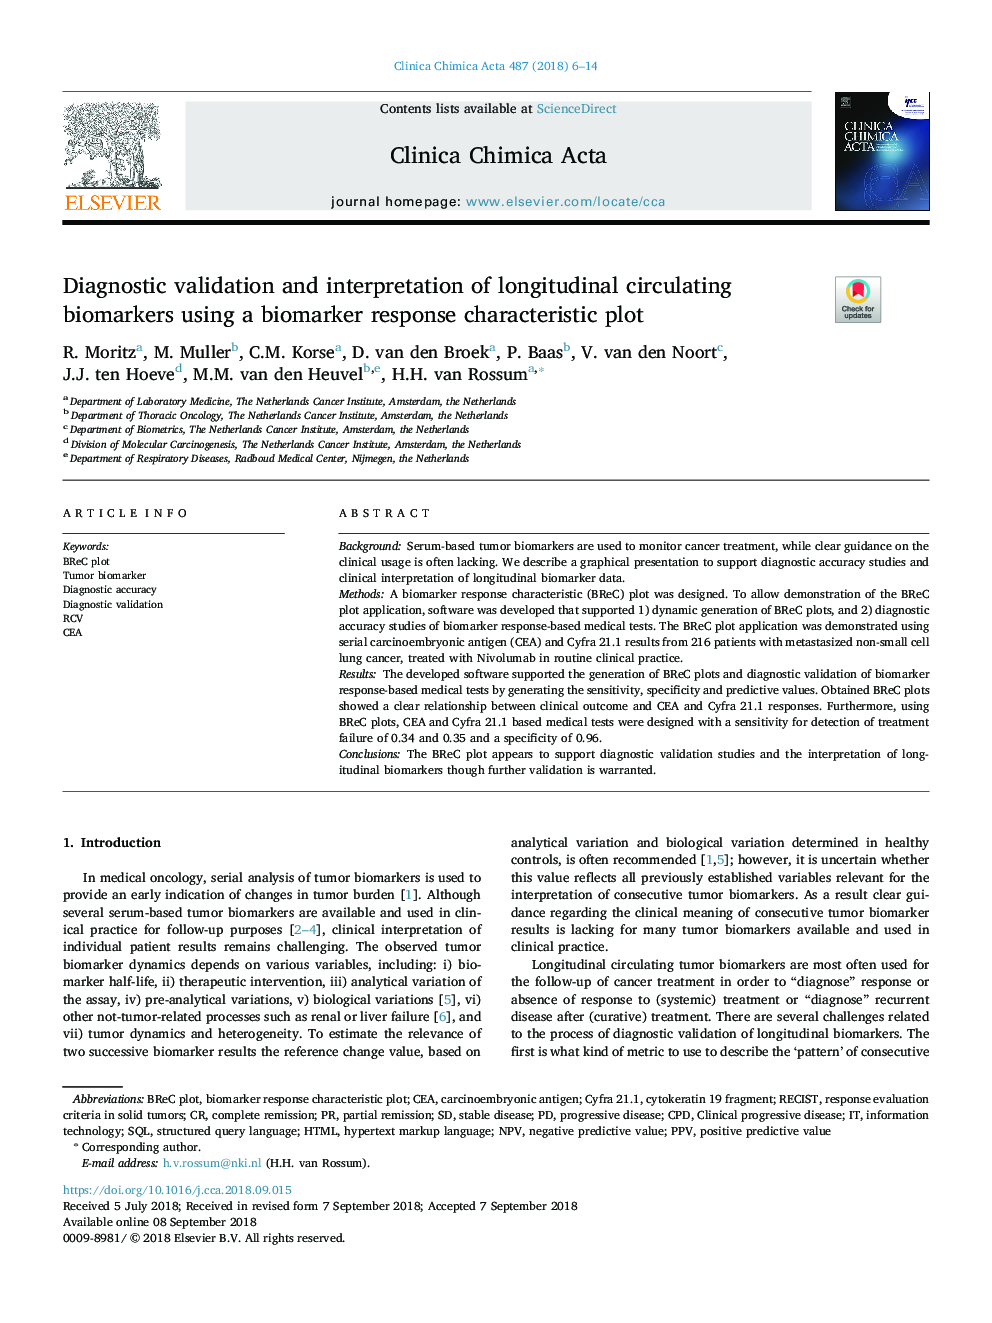 Diagnostic validation and interpretation of longitudinal circulating biomarkers using a biomarker response characteristic plot